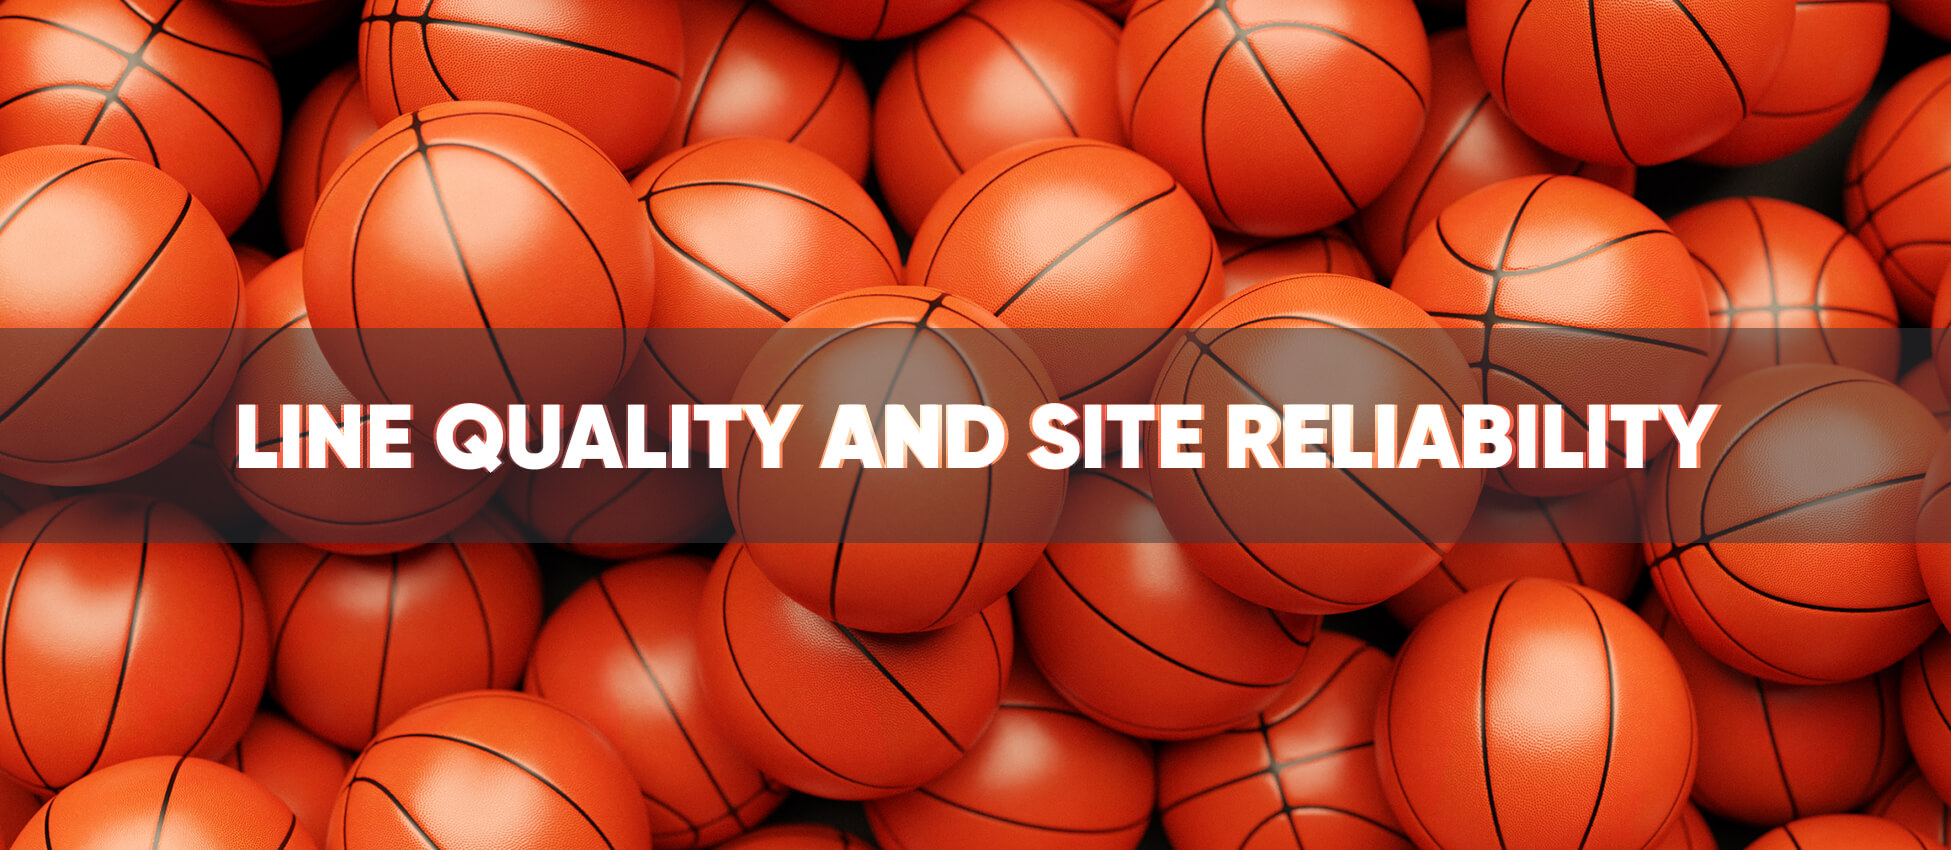 Line quality and site reliability